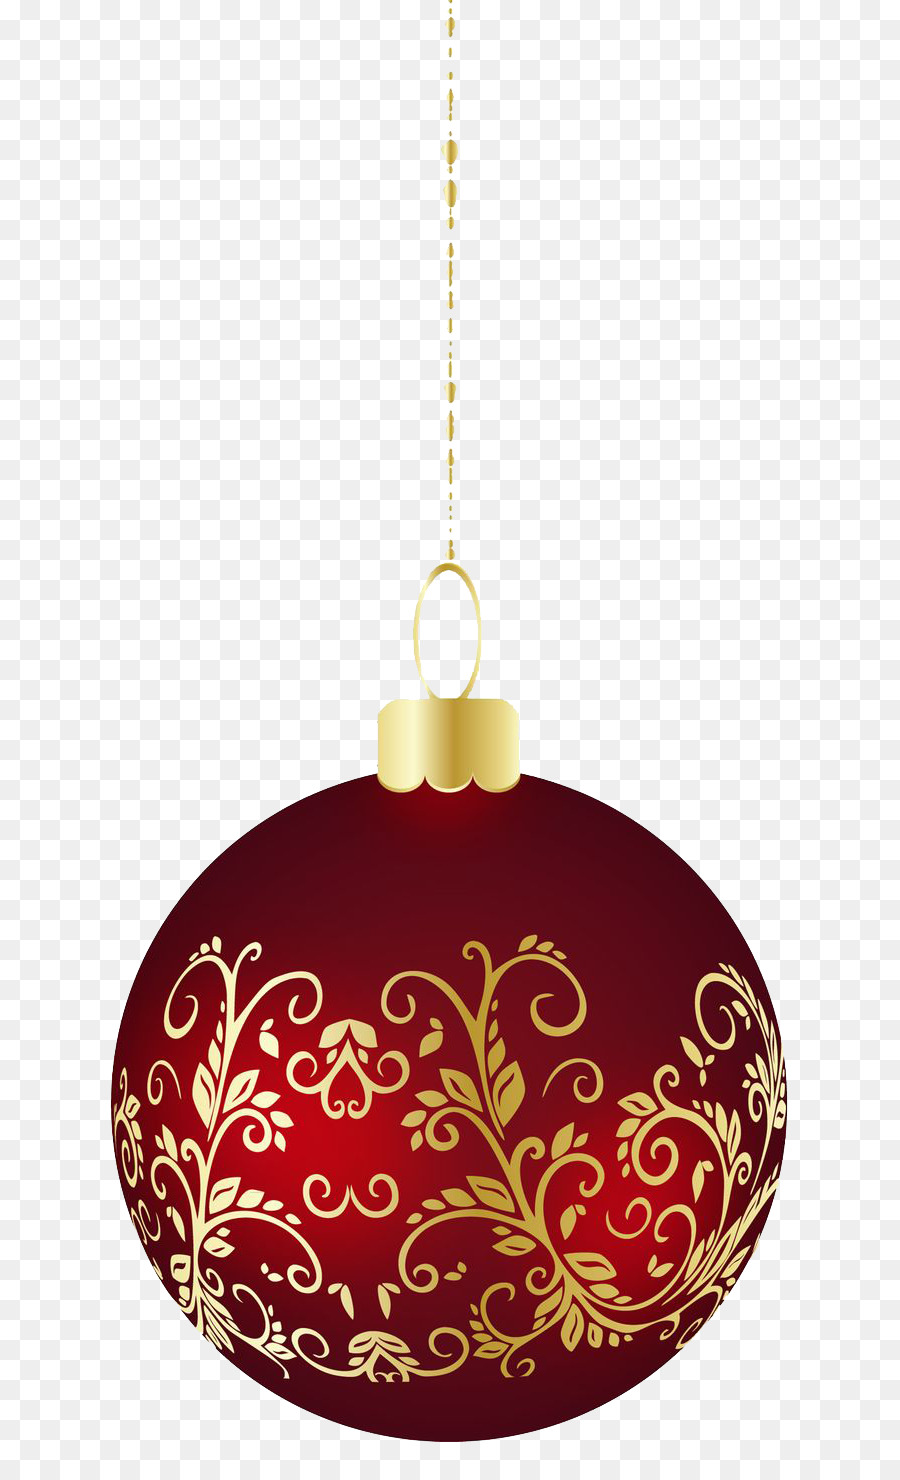 Christmas ornament Christmas decoration Clip art - Christmas Ornament PNG Image png download - 736*1463 - Free Transparent Christmas Ornament png Download.